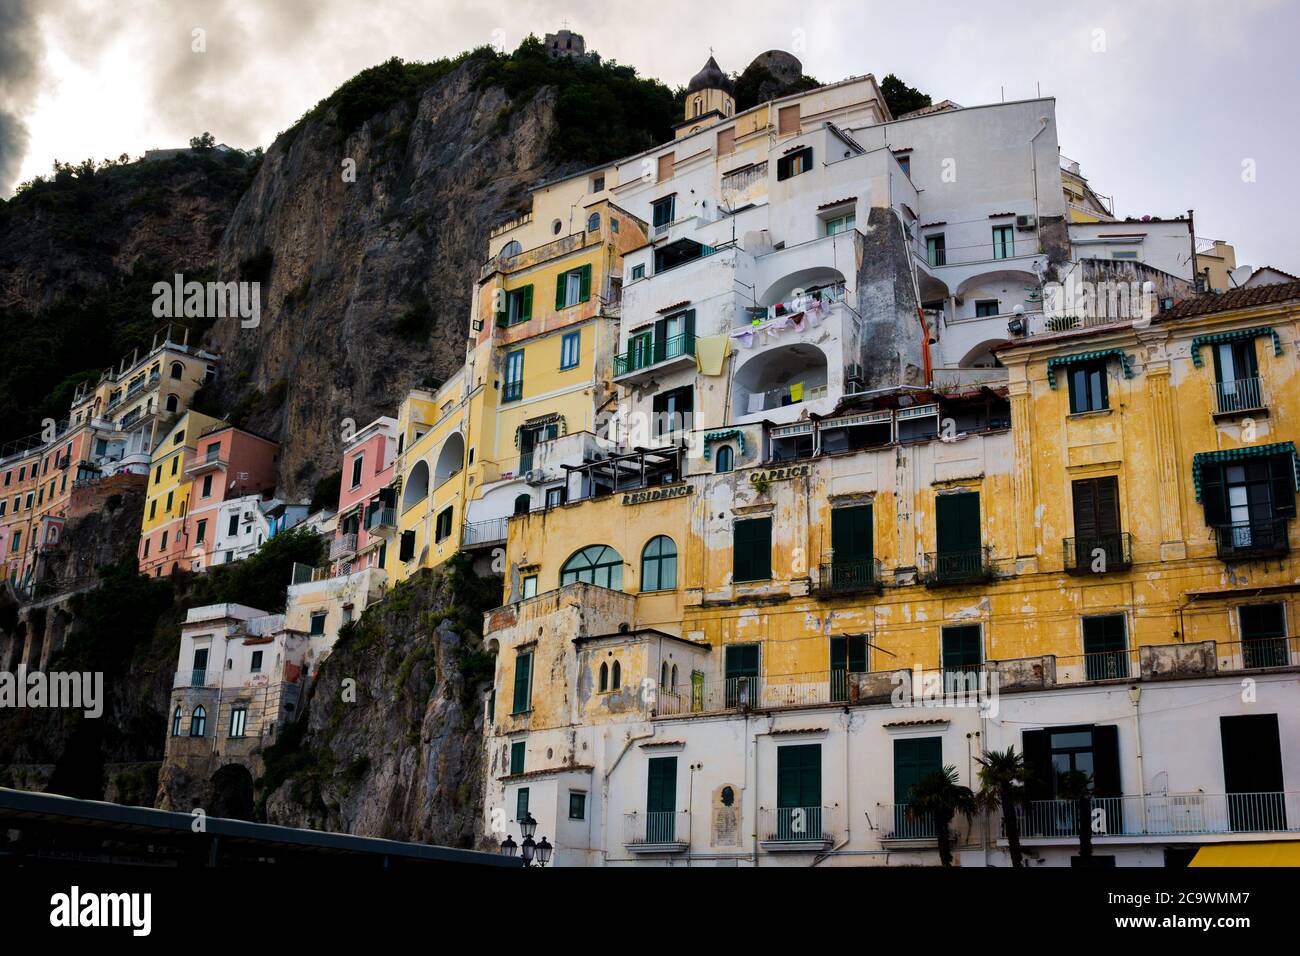 Buildings in the town of Amalfi on the Amalfi Coast. Stock Photo